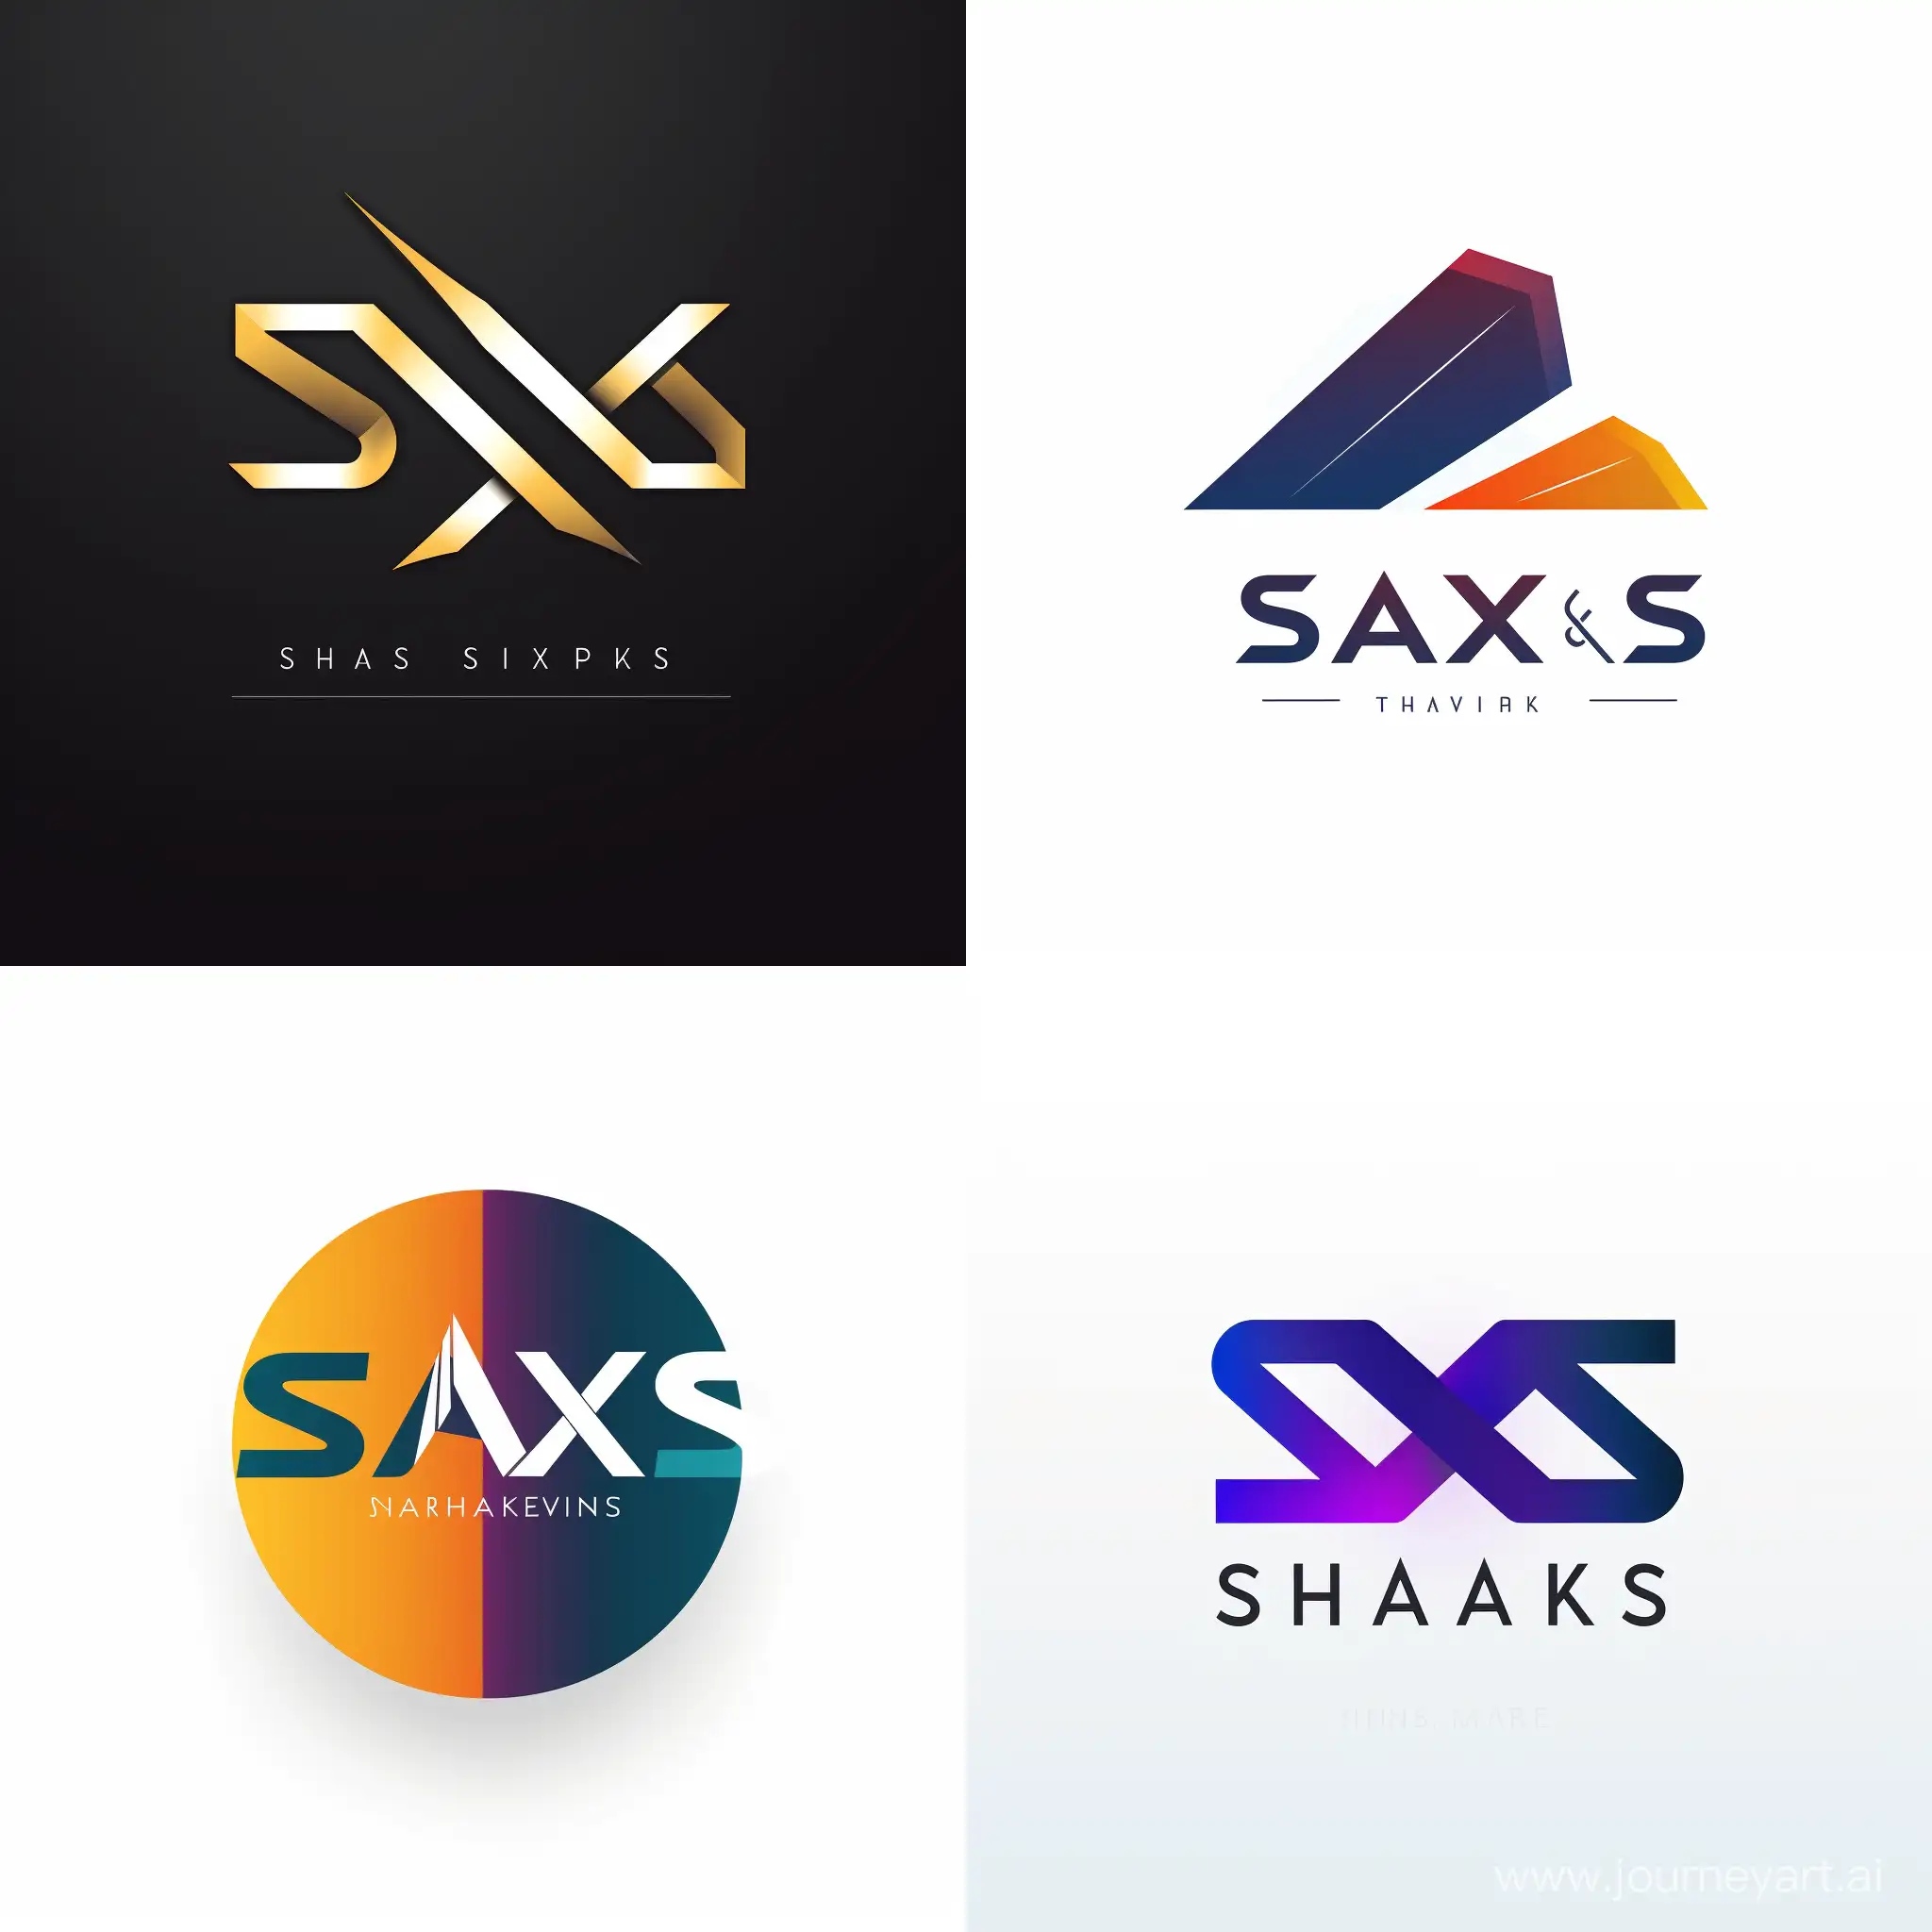 Minimalistic-Flat-2D-Logo-Design-with-SHAXS-Letters